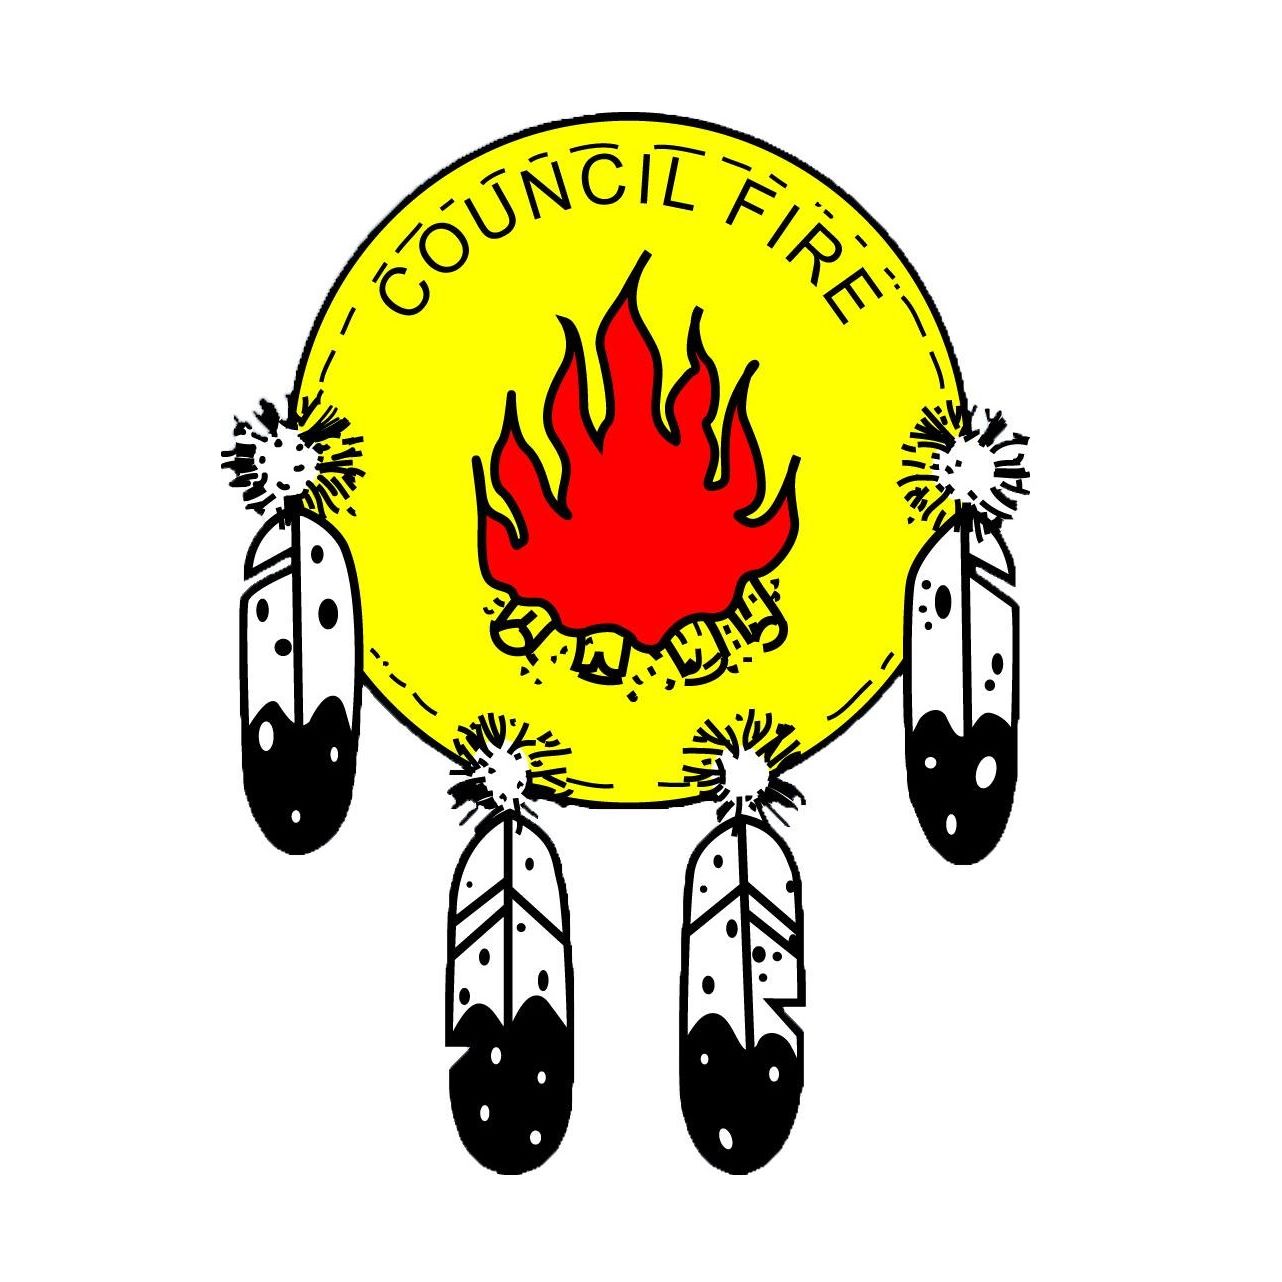 Native American Organizations in Toronto Ontario - Toronto Council Fire Native Cultural Centre